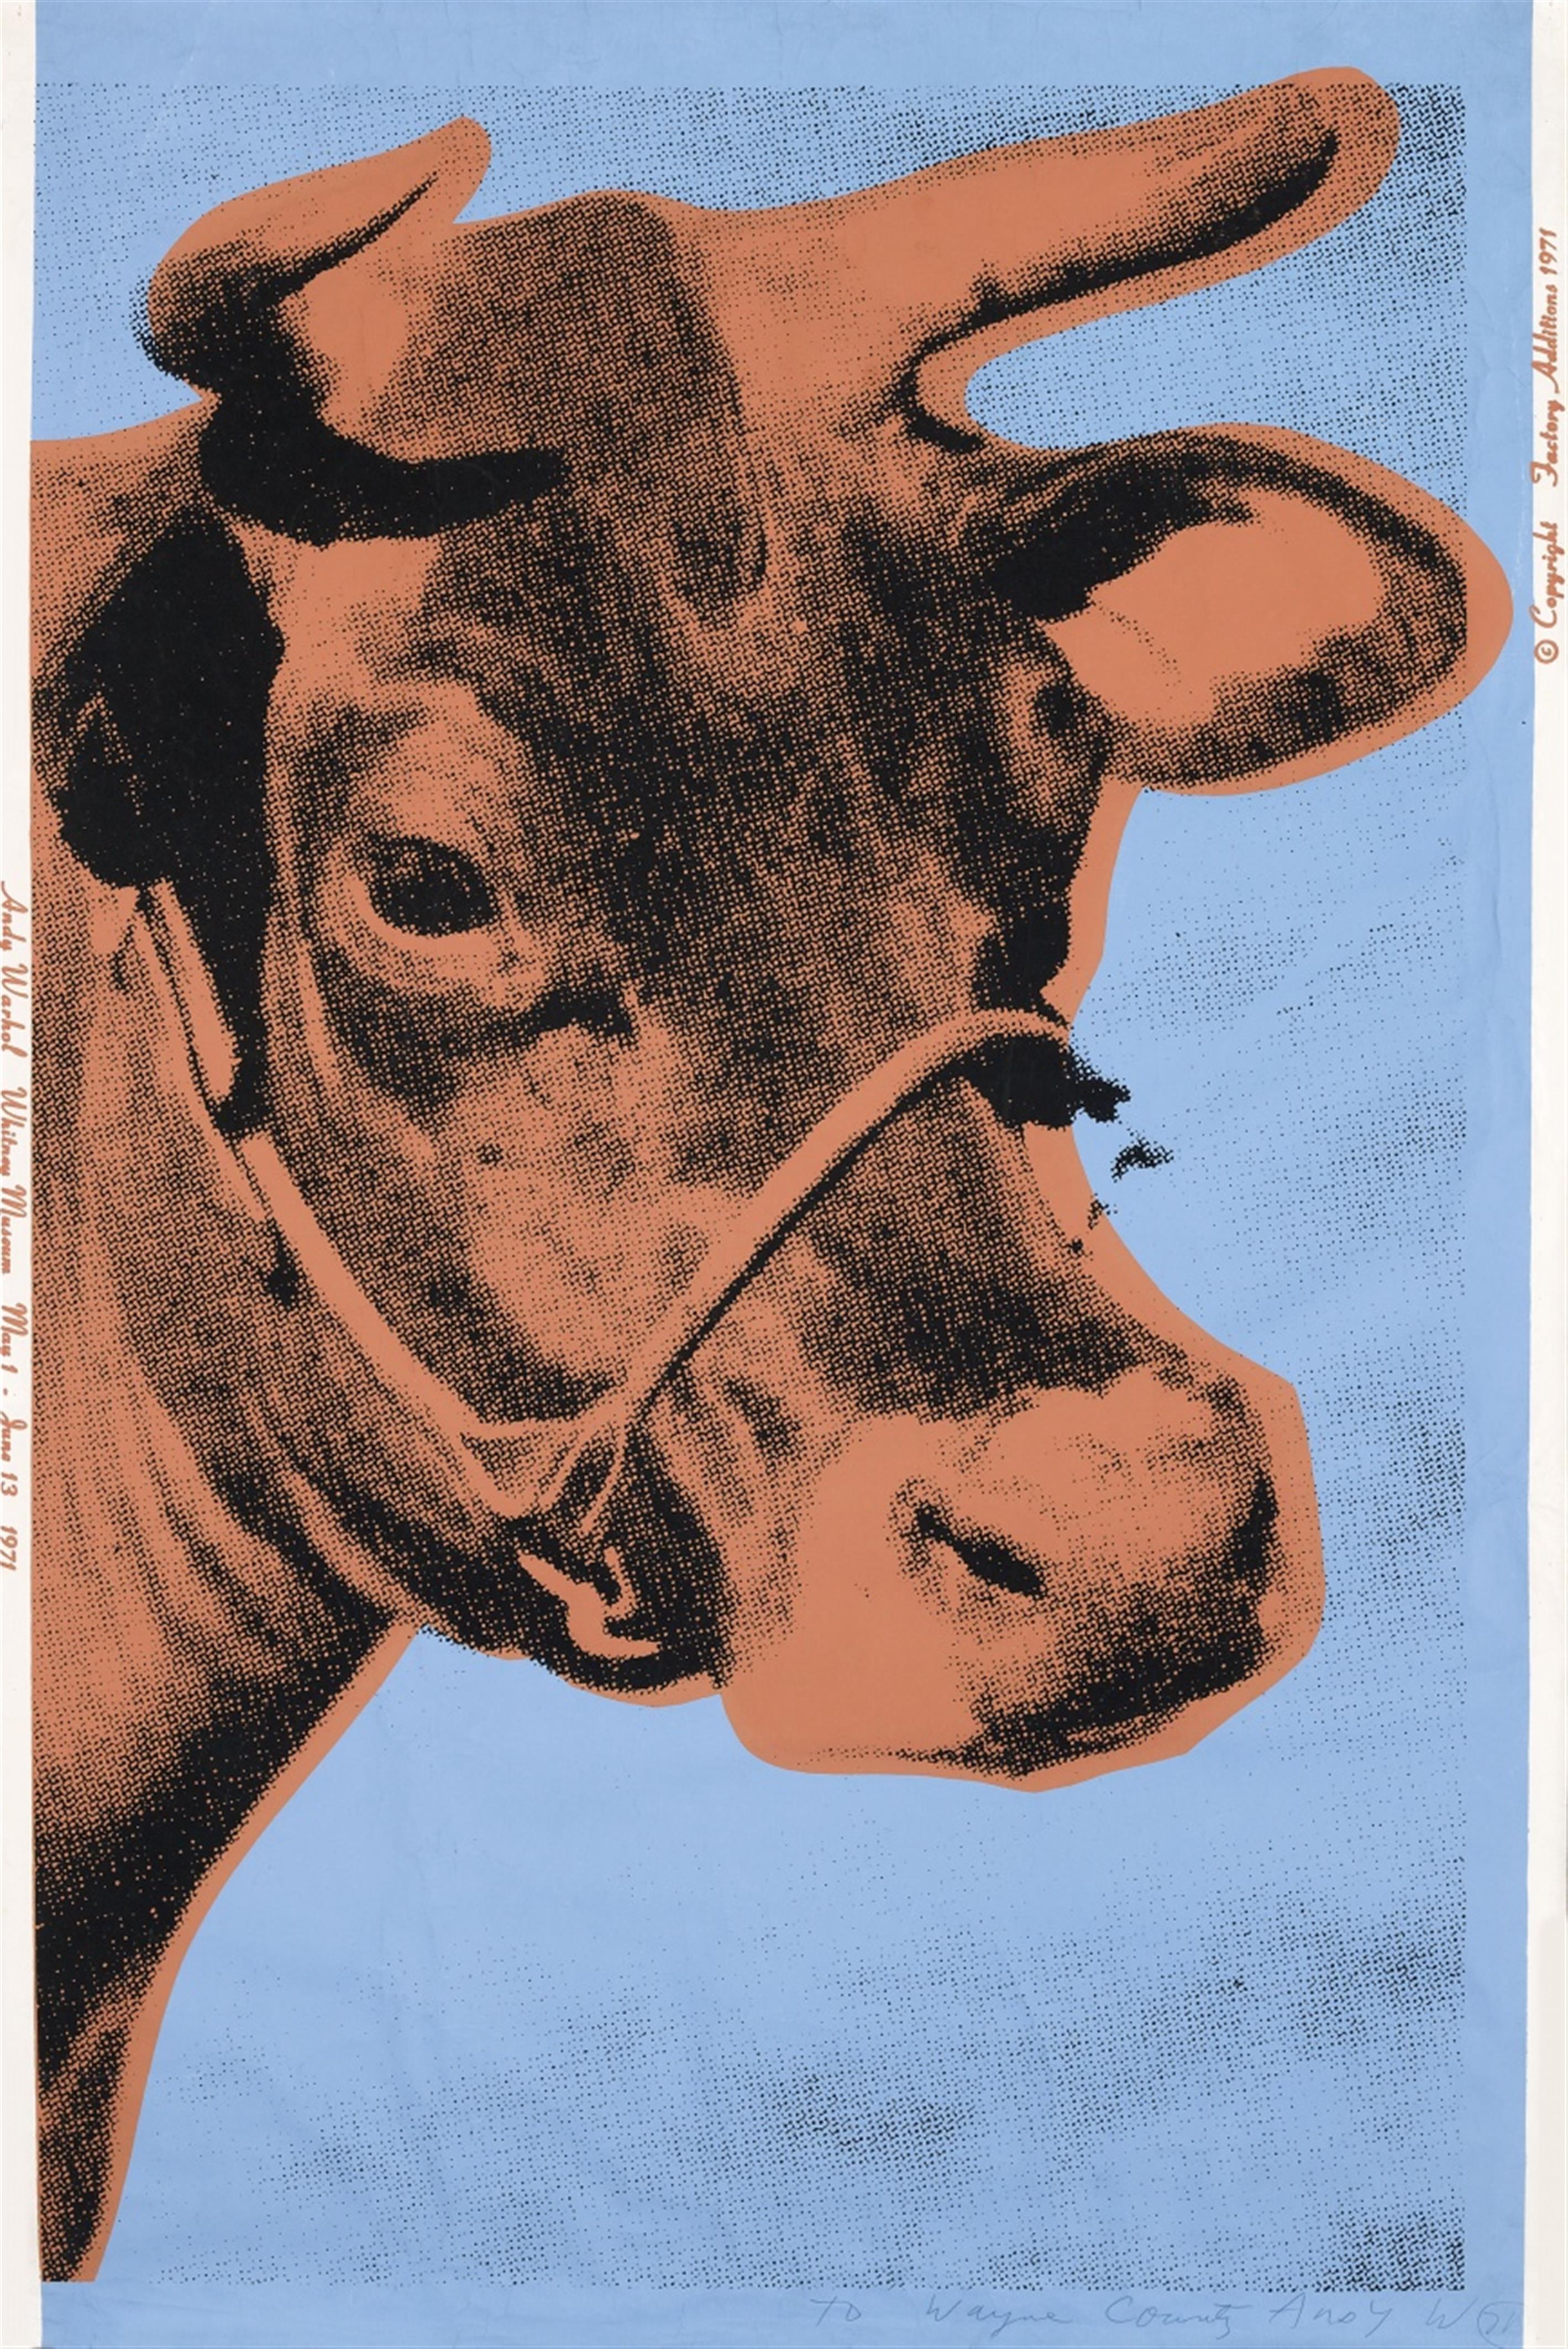 Andy Warhol - Cow - image-1